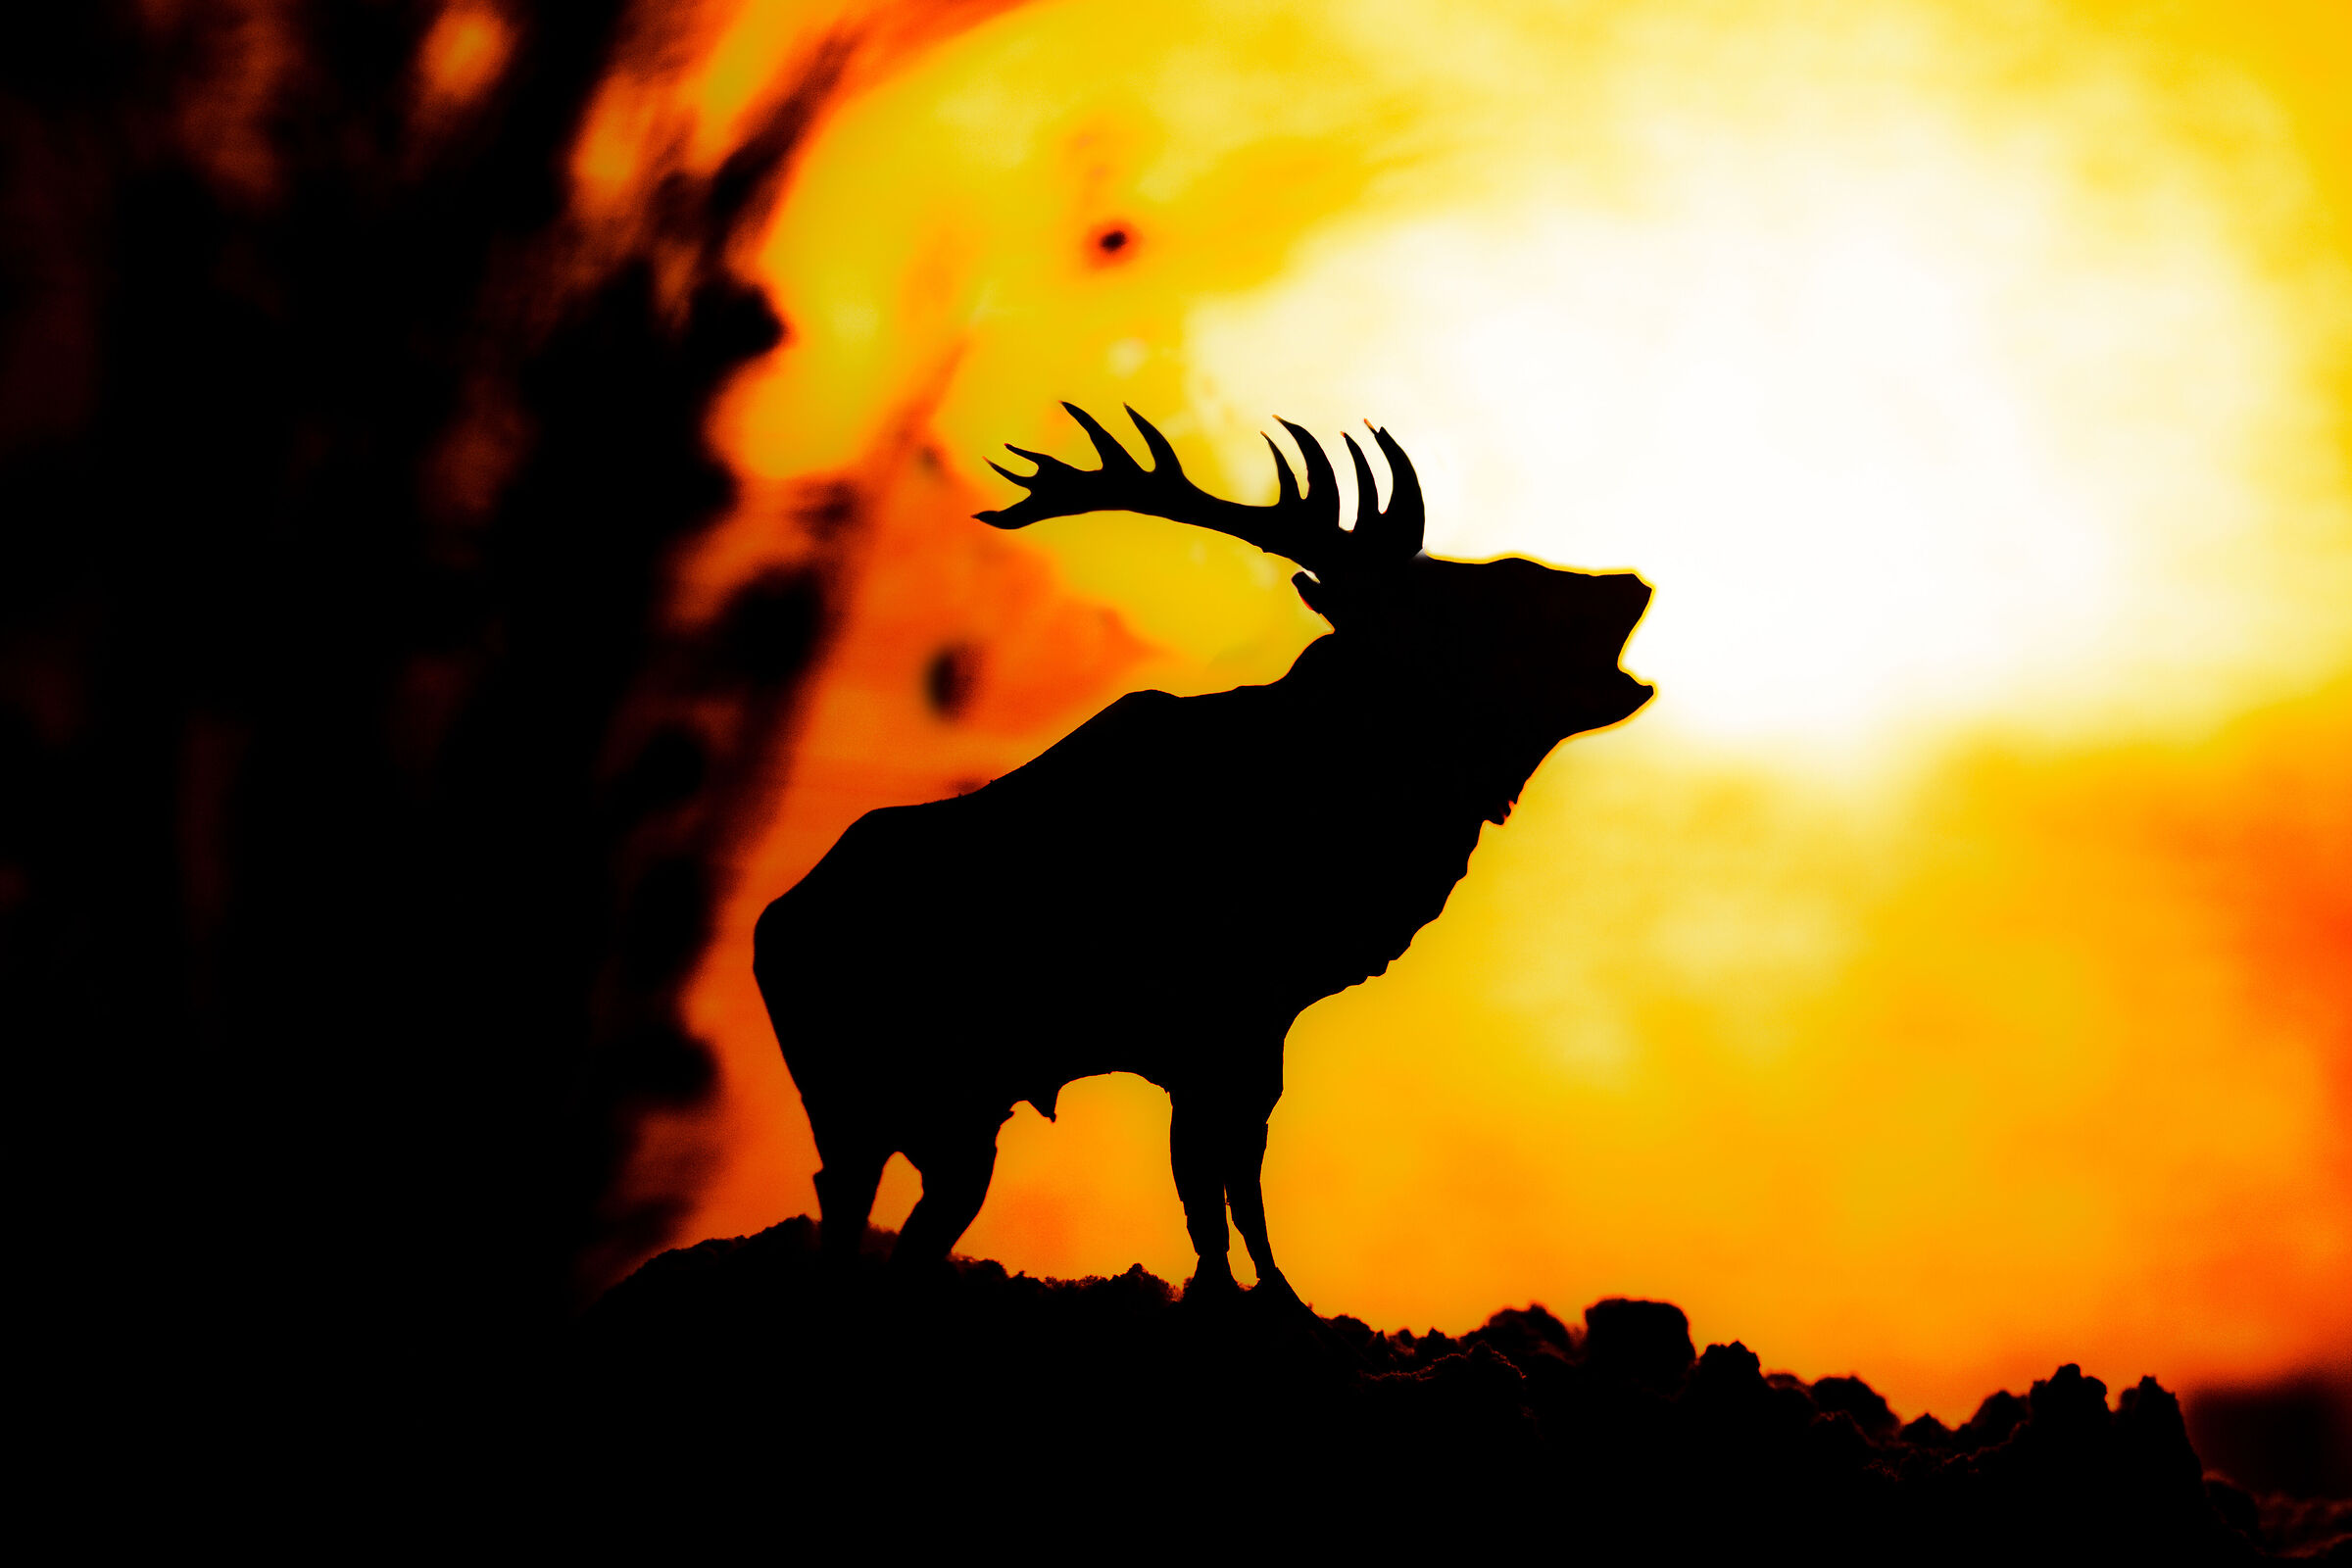 Deer at Sunset...